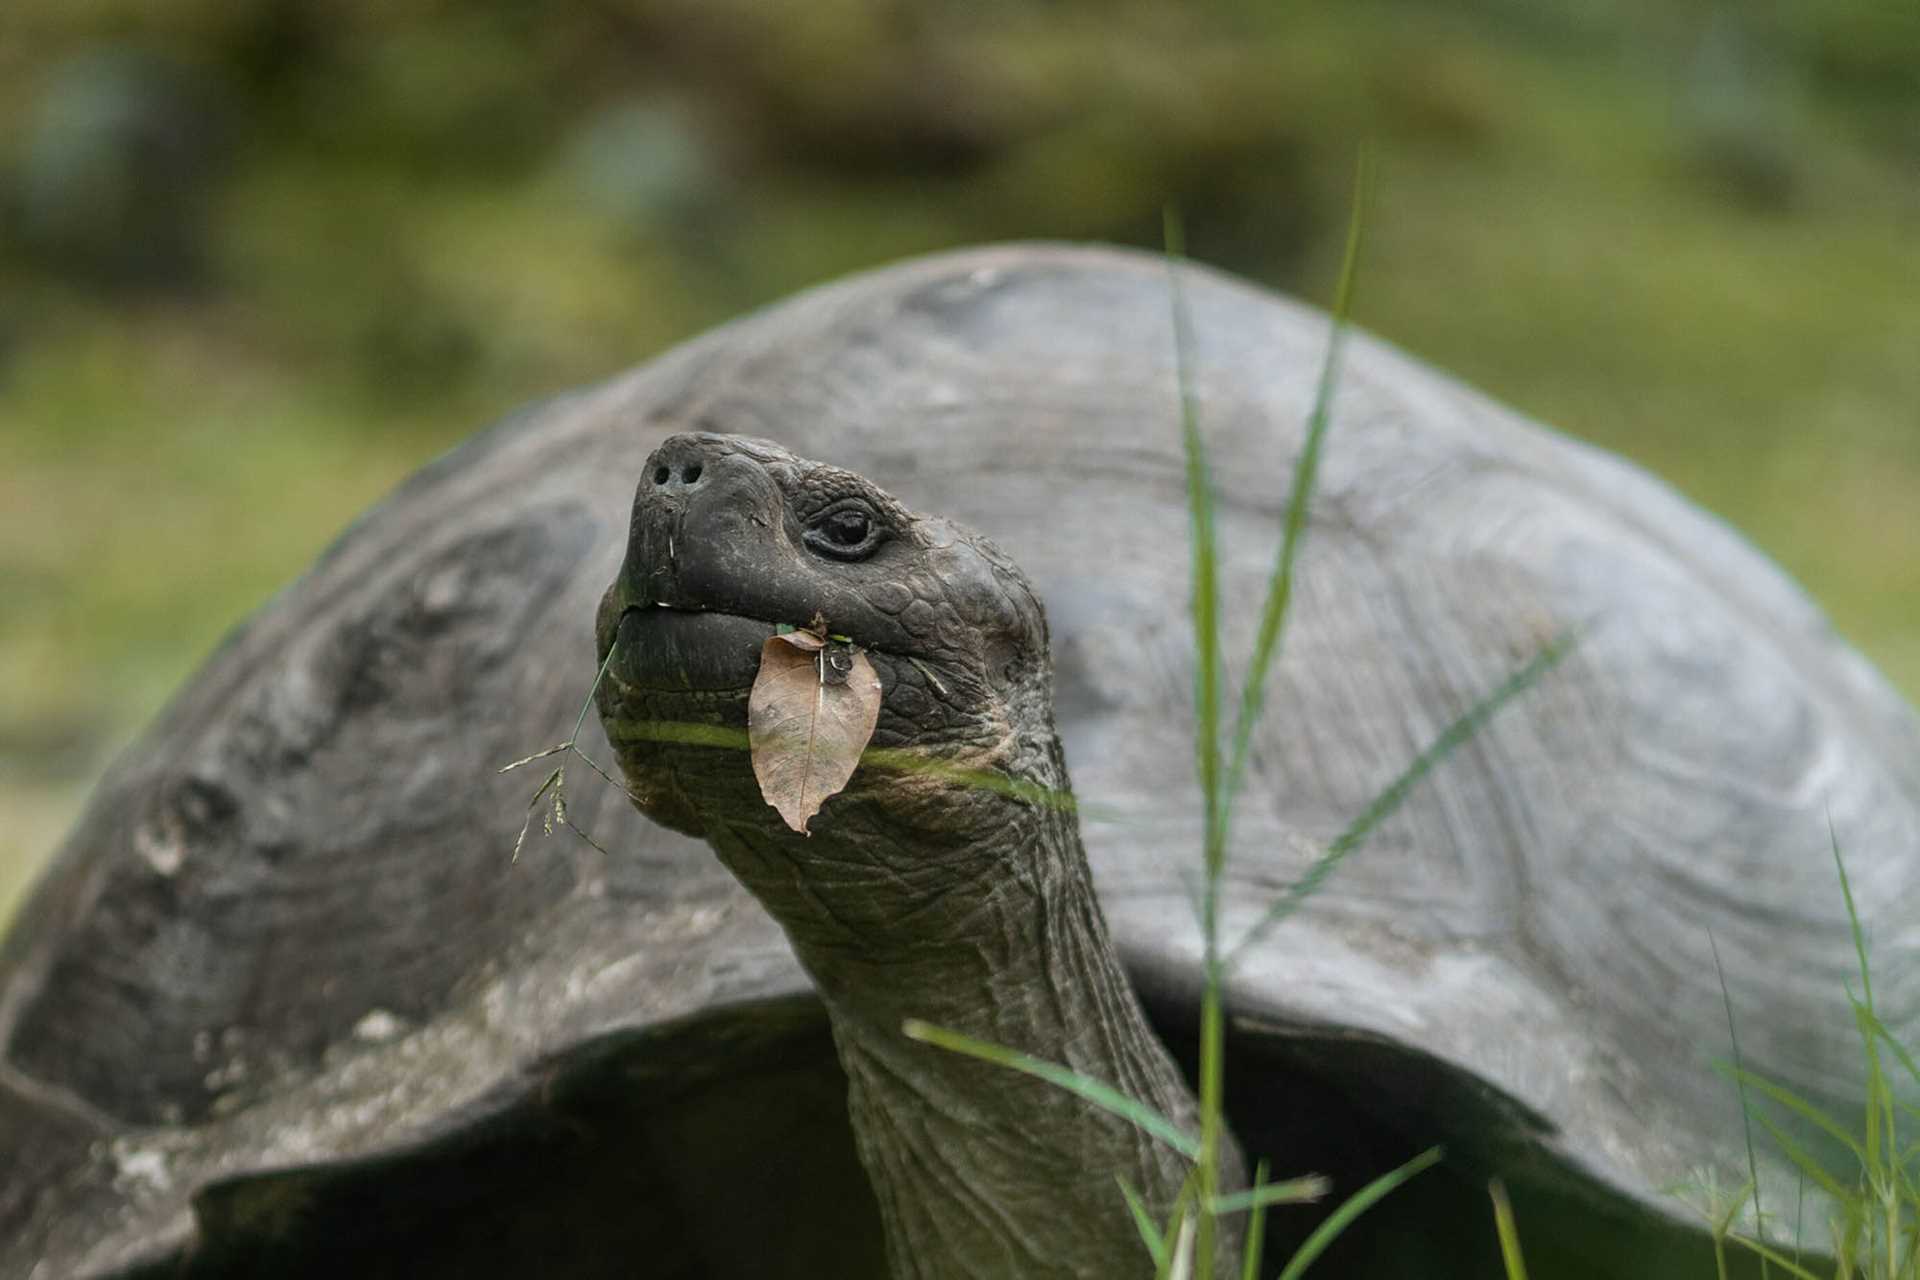 tortoise eating a leaf